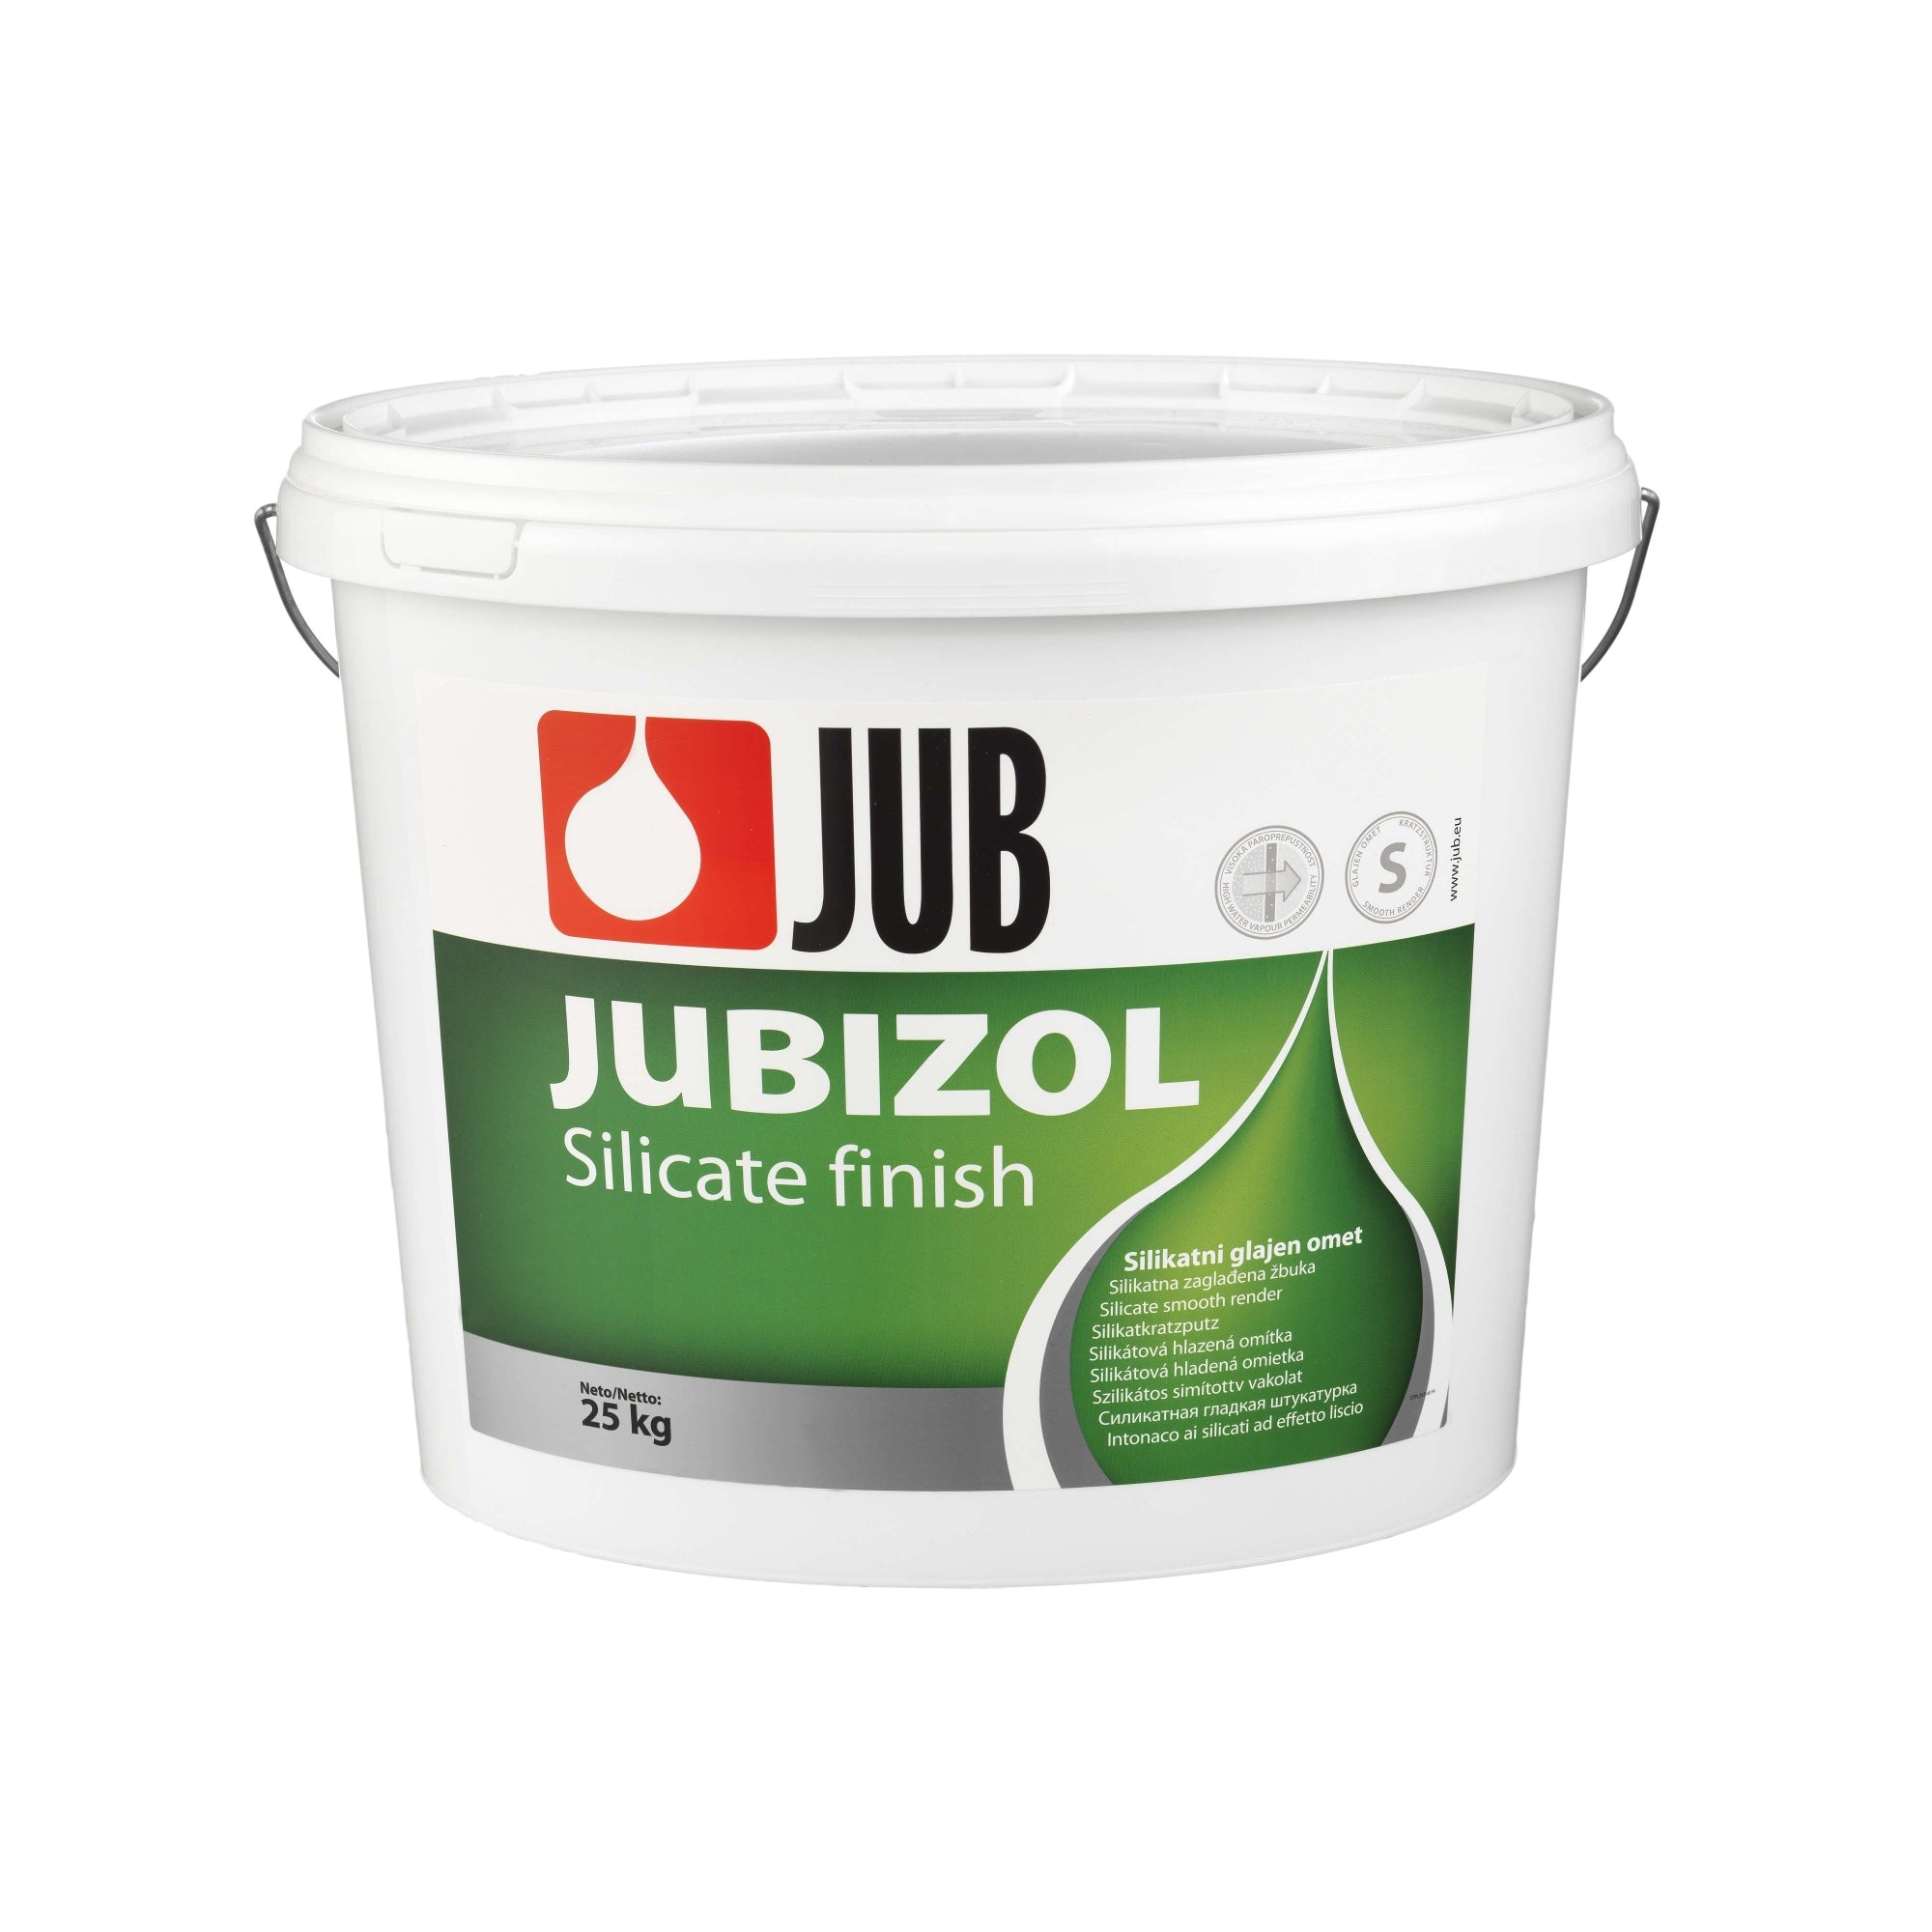 JUB JUBIZOL Silicate finish S silikátová hladená omietka 25 kg